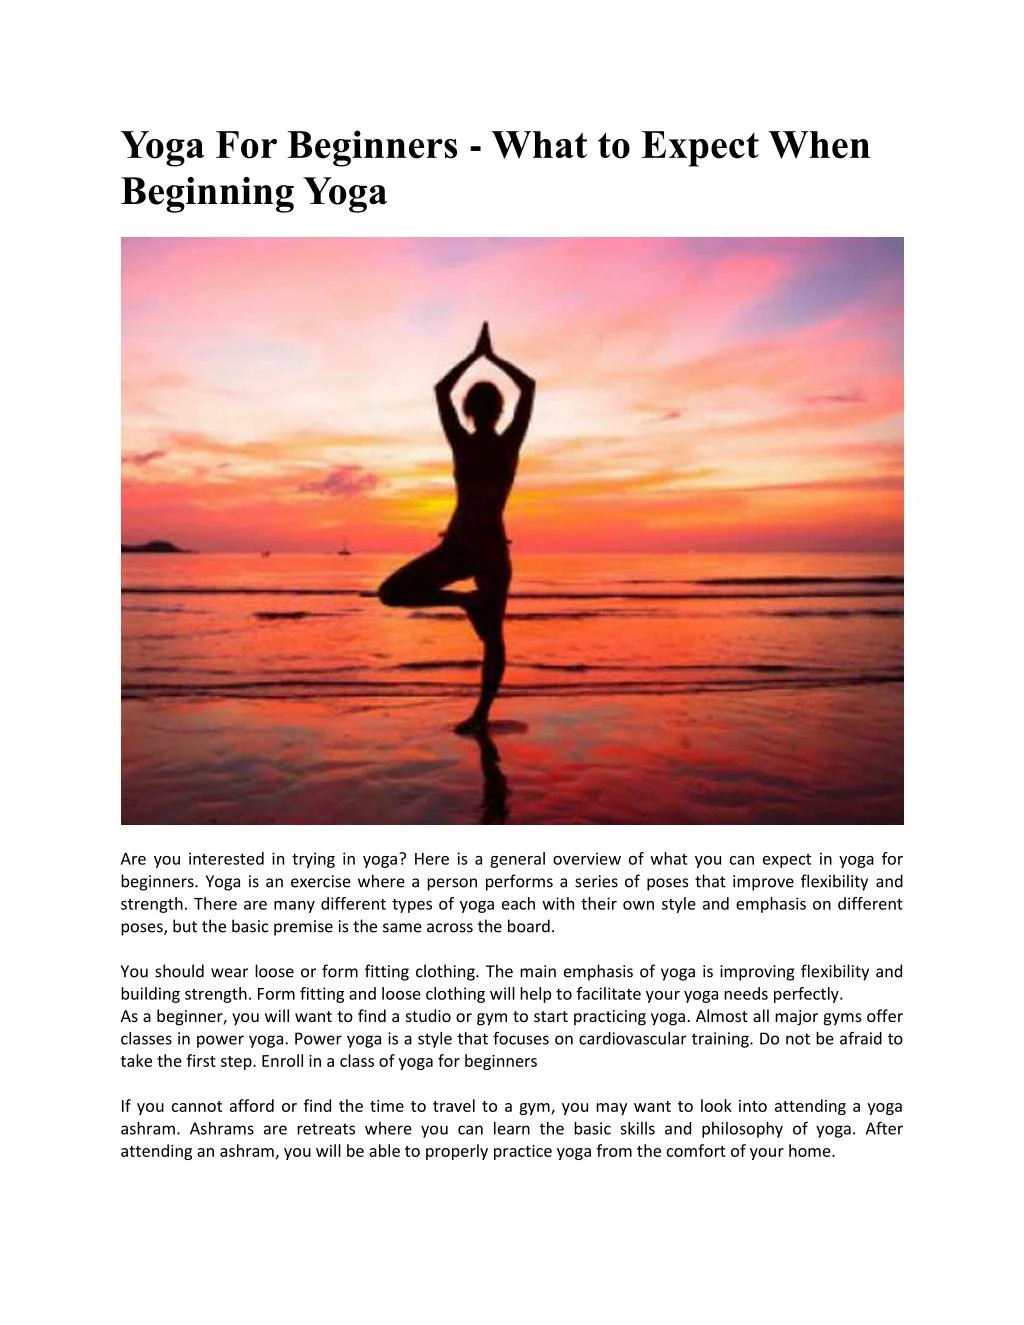 Yoga meditations for beginners